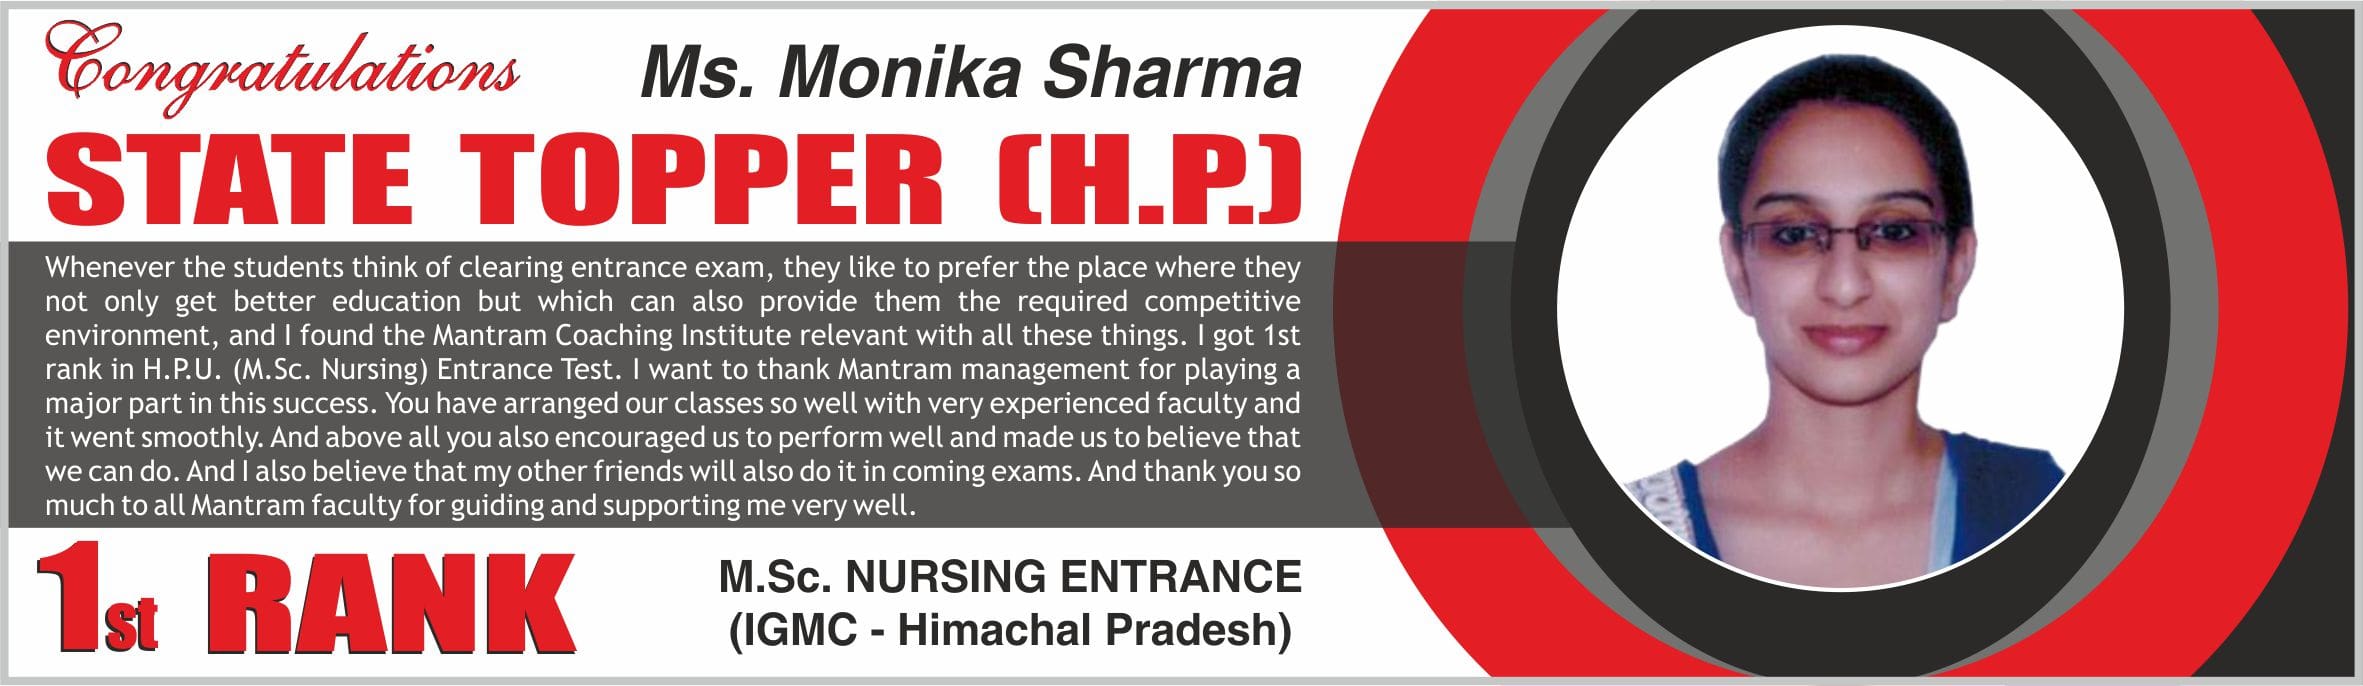 2-m-sc-nursing-entrance-1st-rank-result-in-chandigarh-hp